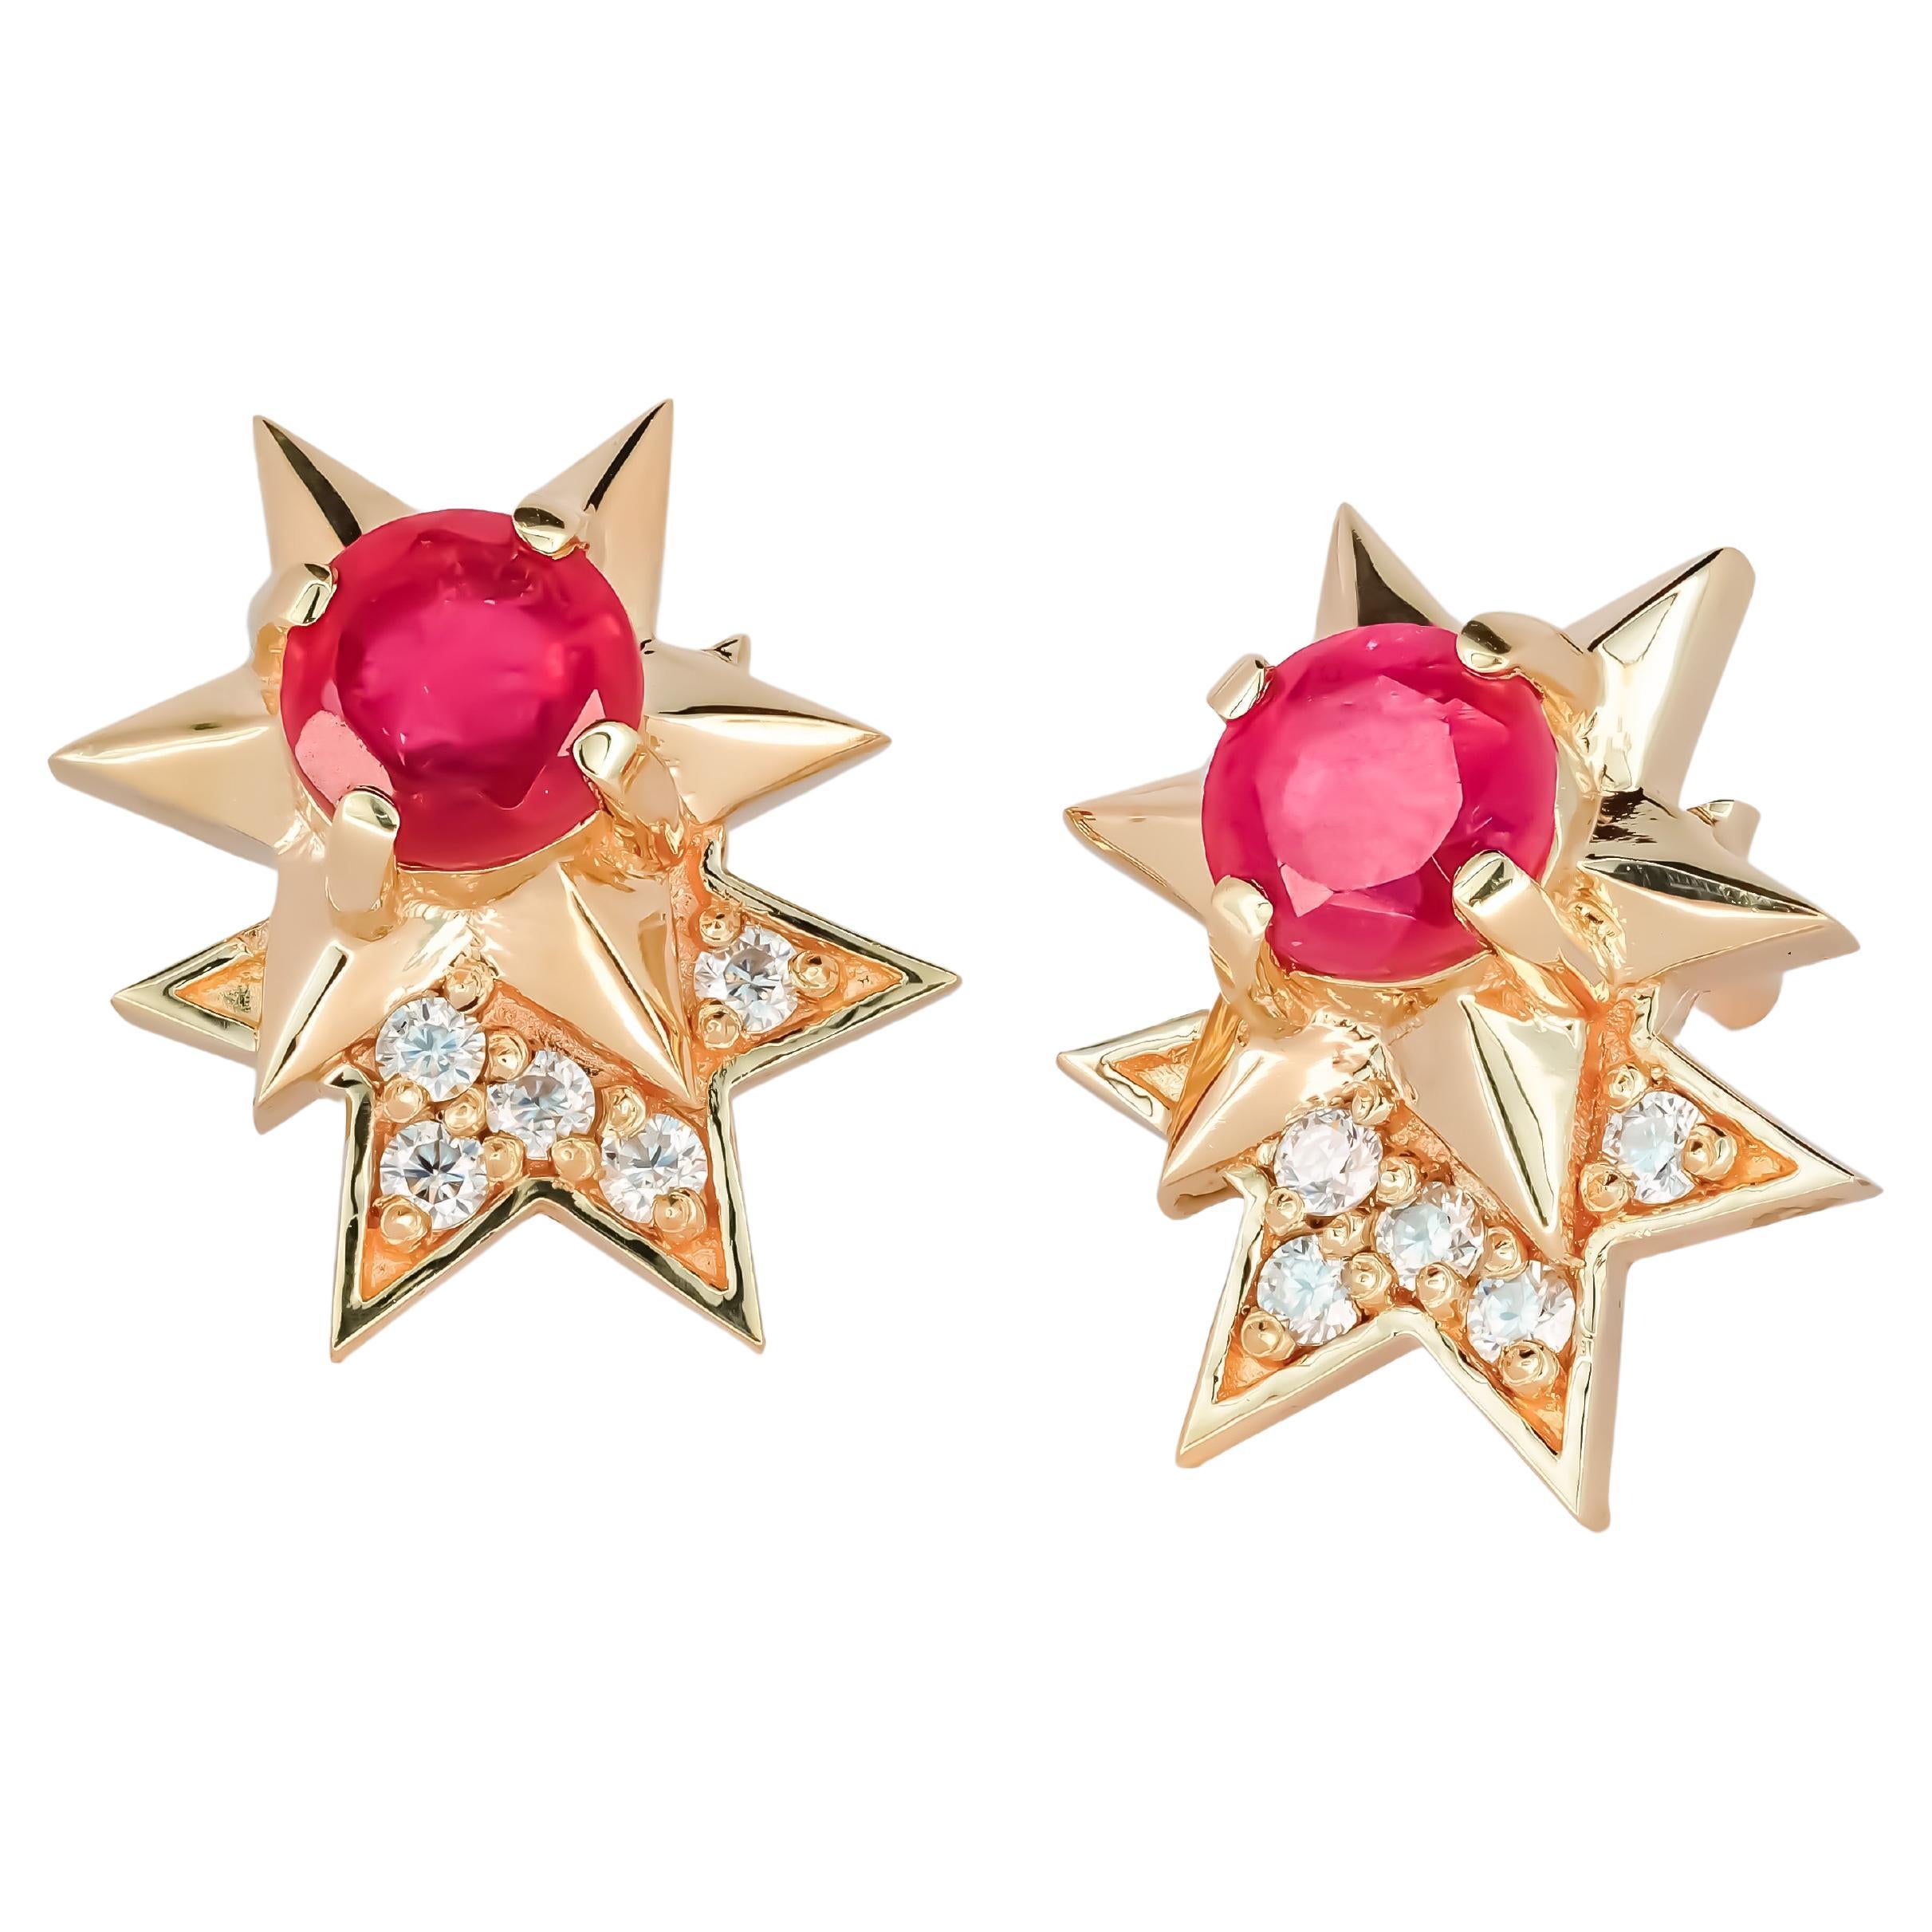 14k gold earrings studs with rubies and diamonds, Diamond Star Stud Earrings